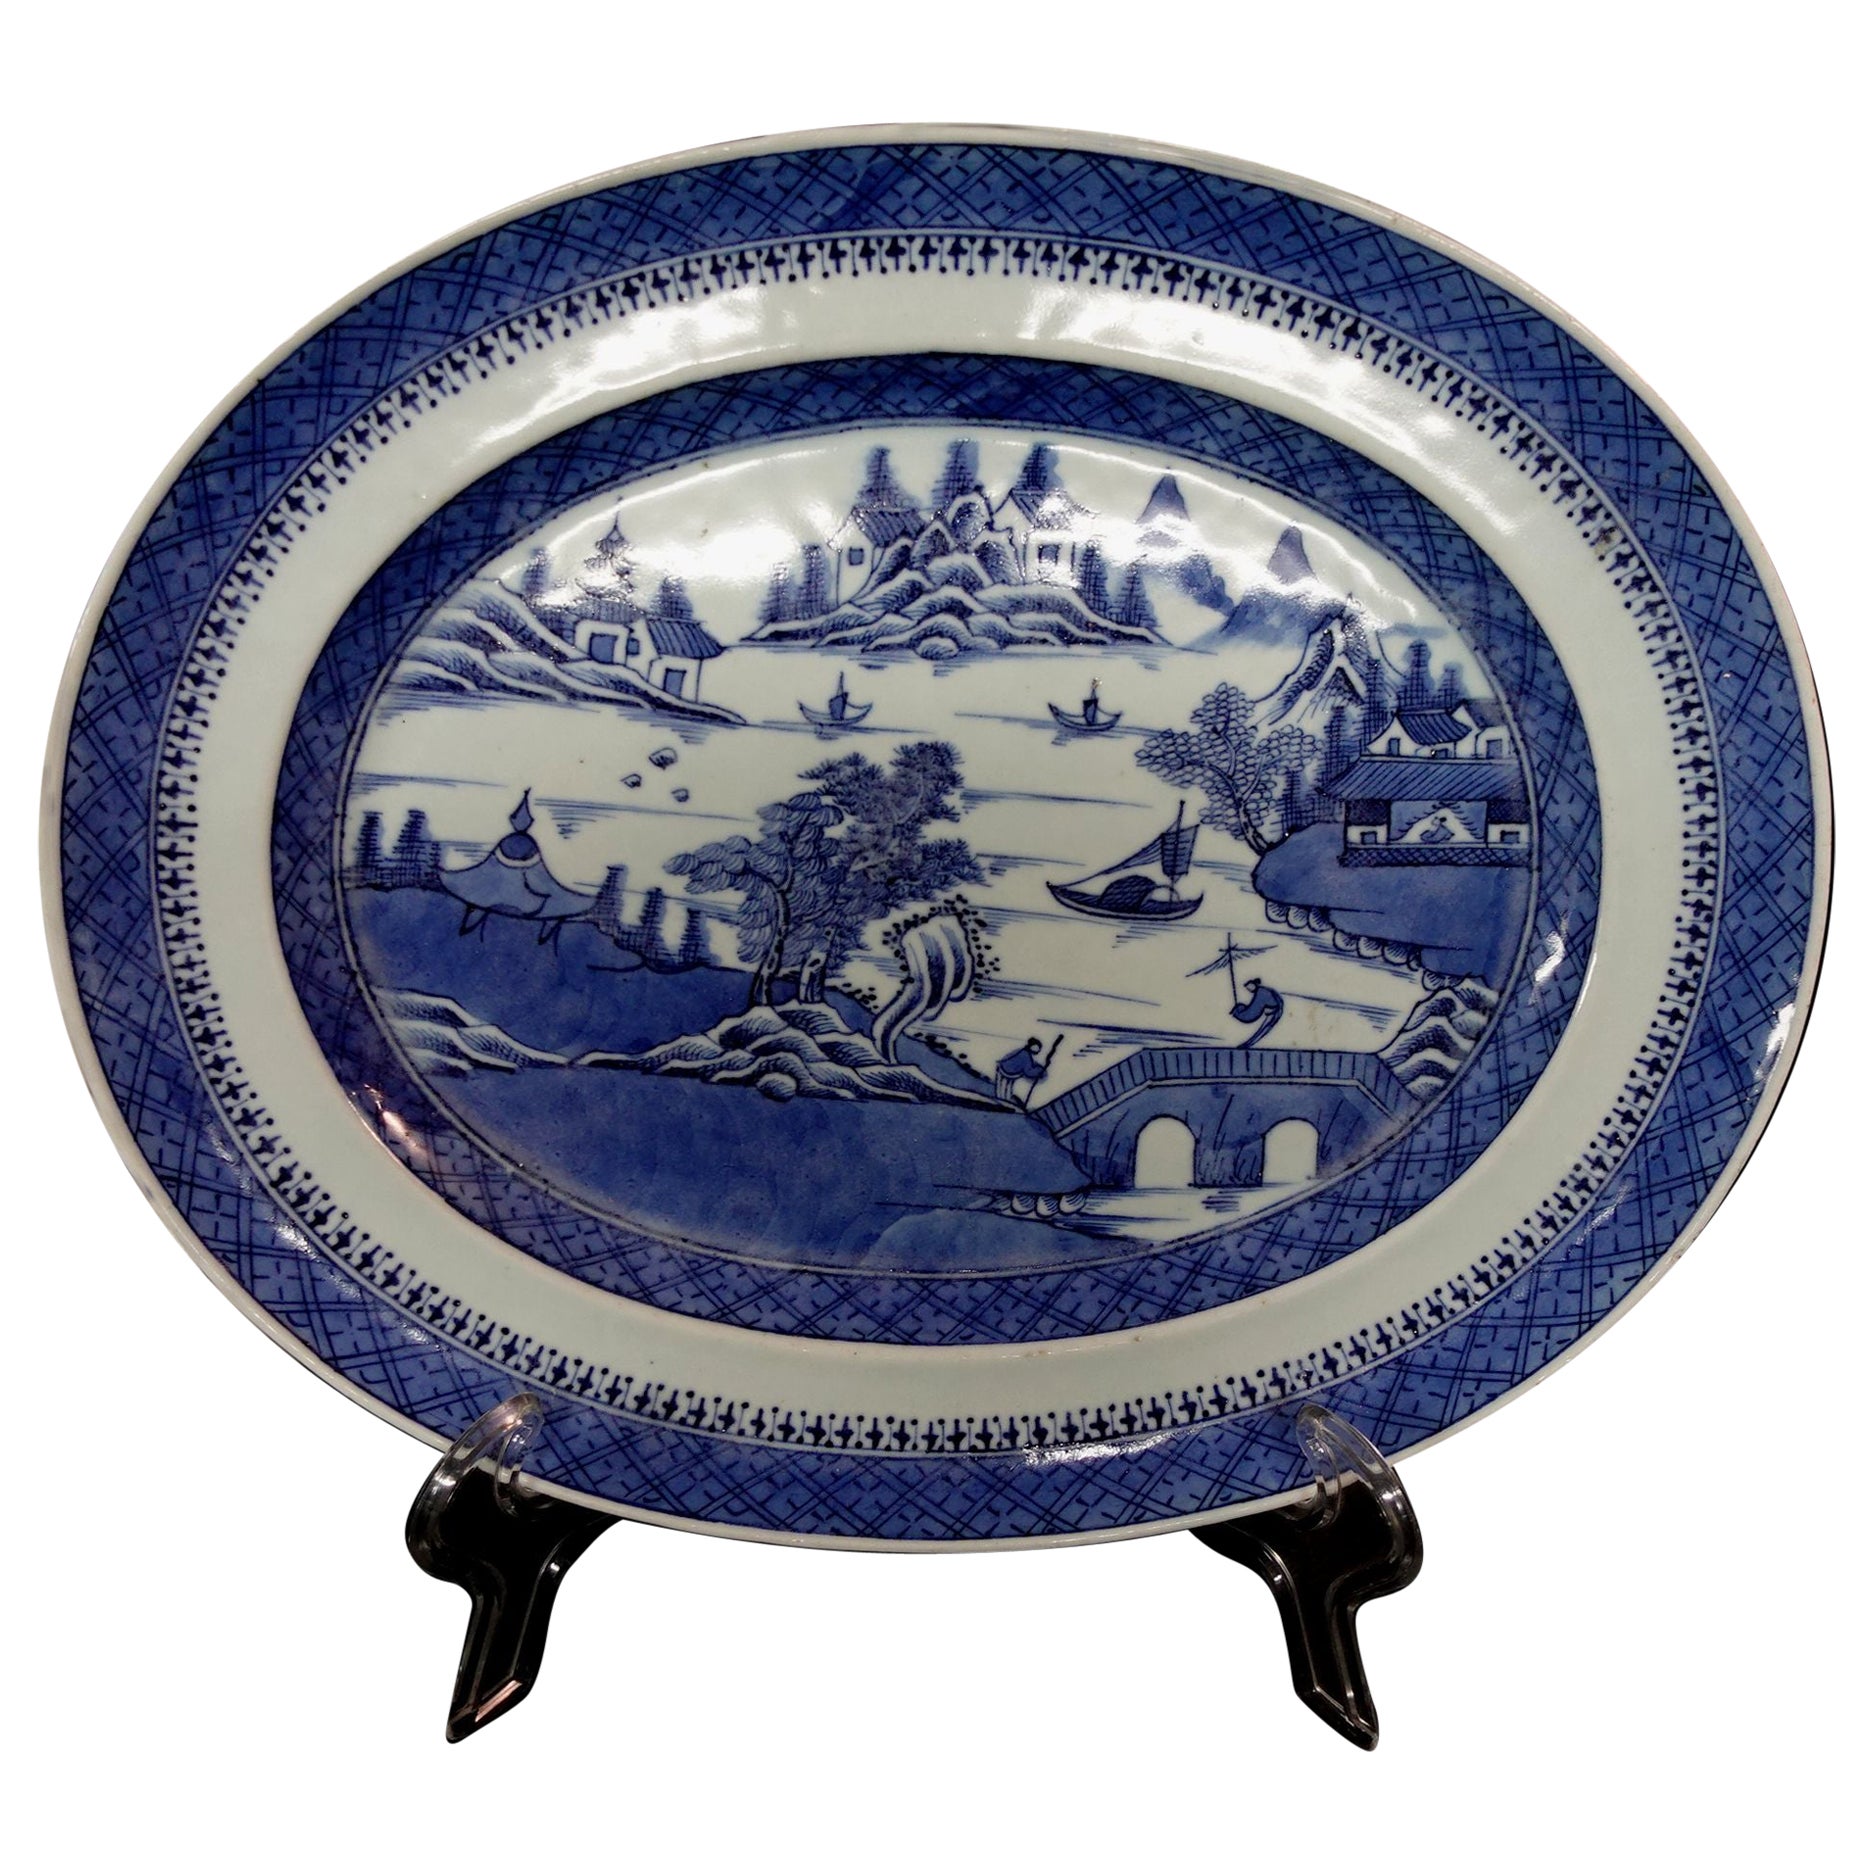 Oval Canton Export Porcelain Platter, 19th Century